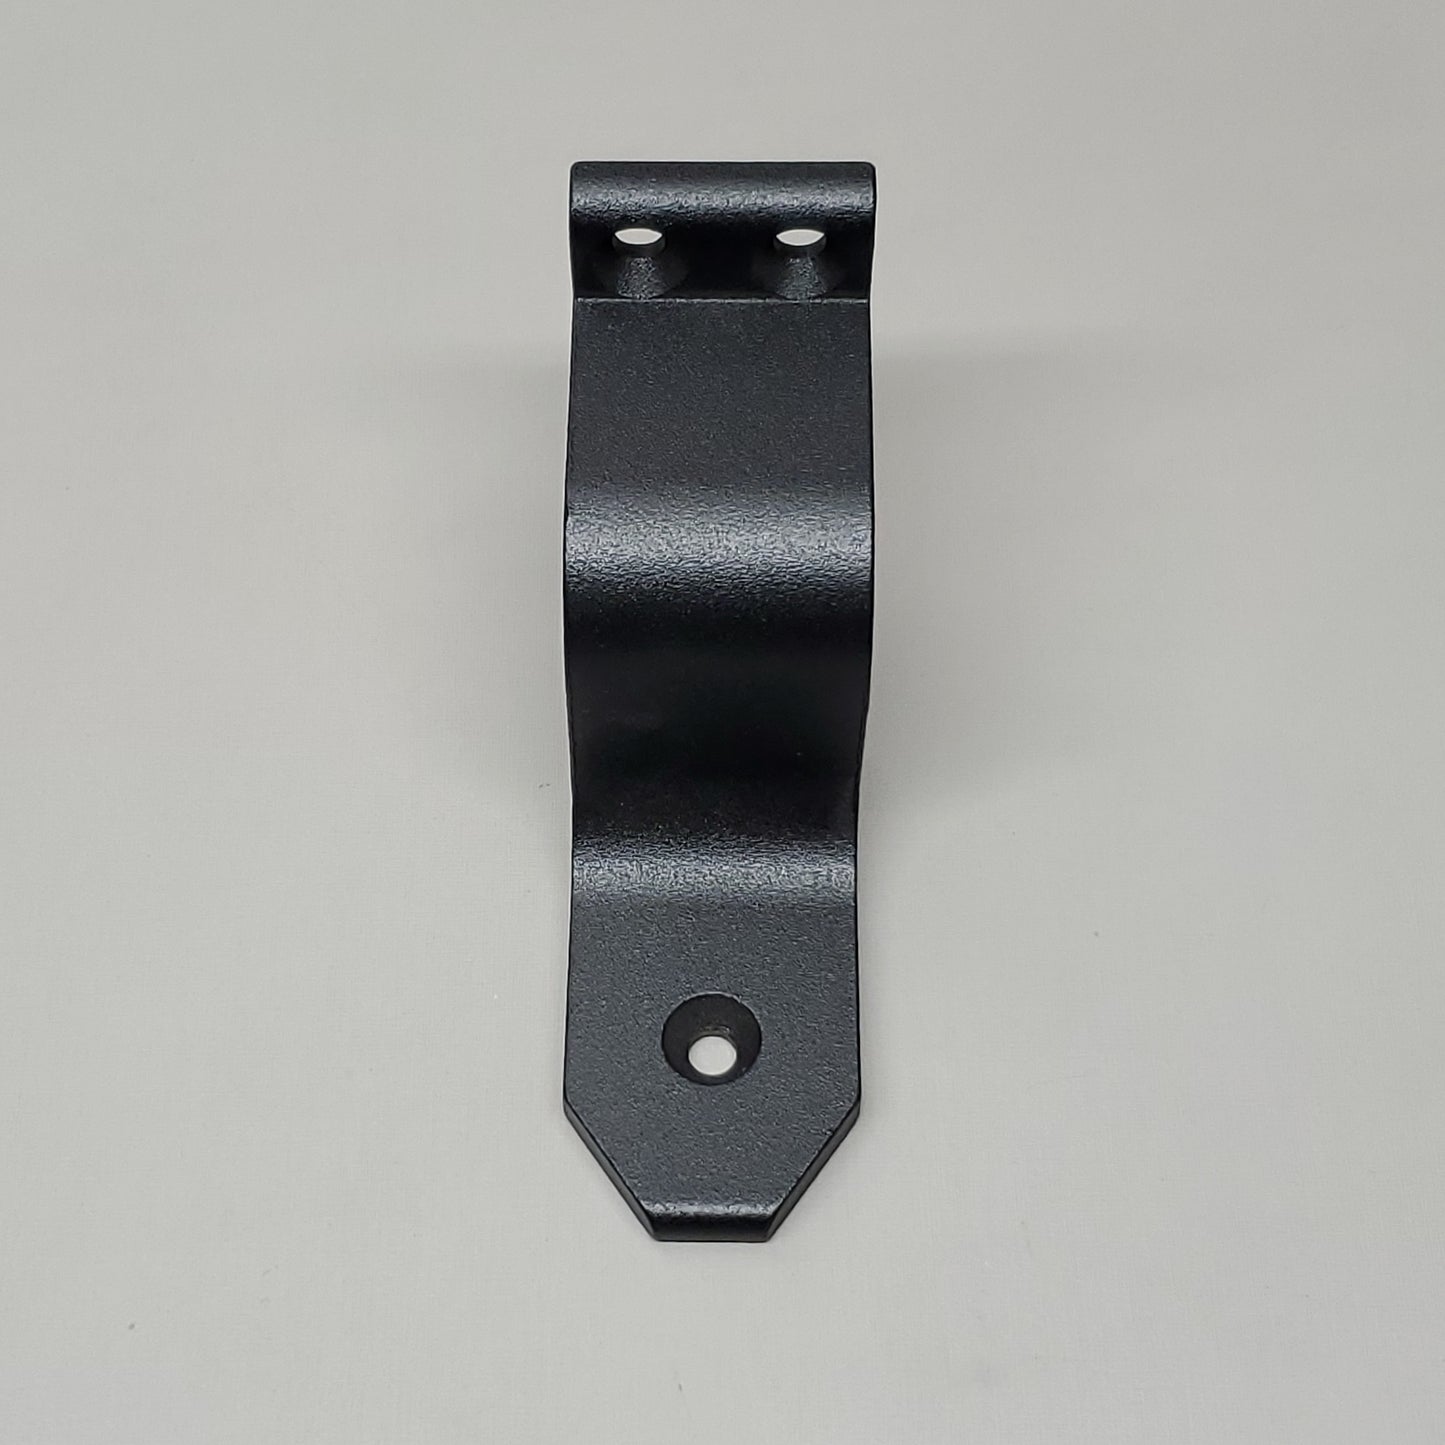 ULTRA MAX Aluminum 1.5" Secondary Rail Inline Bracket W/ Screw Satin Black W080395 (New)